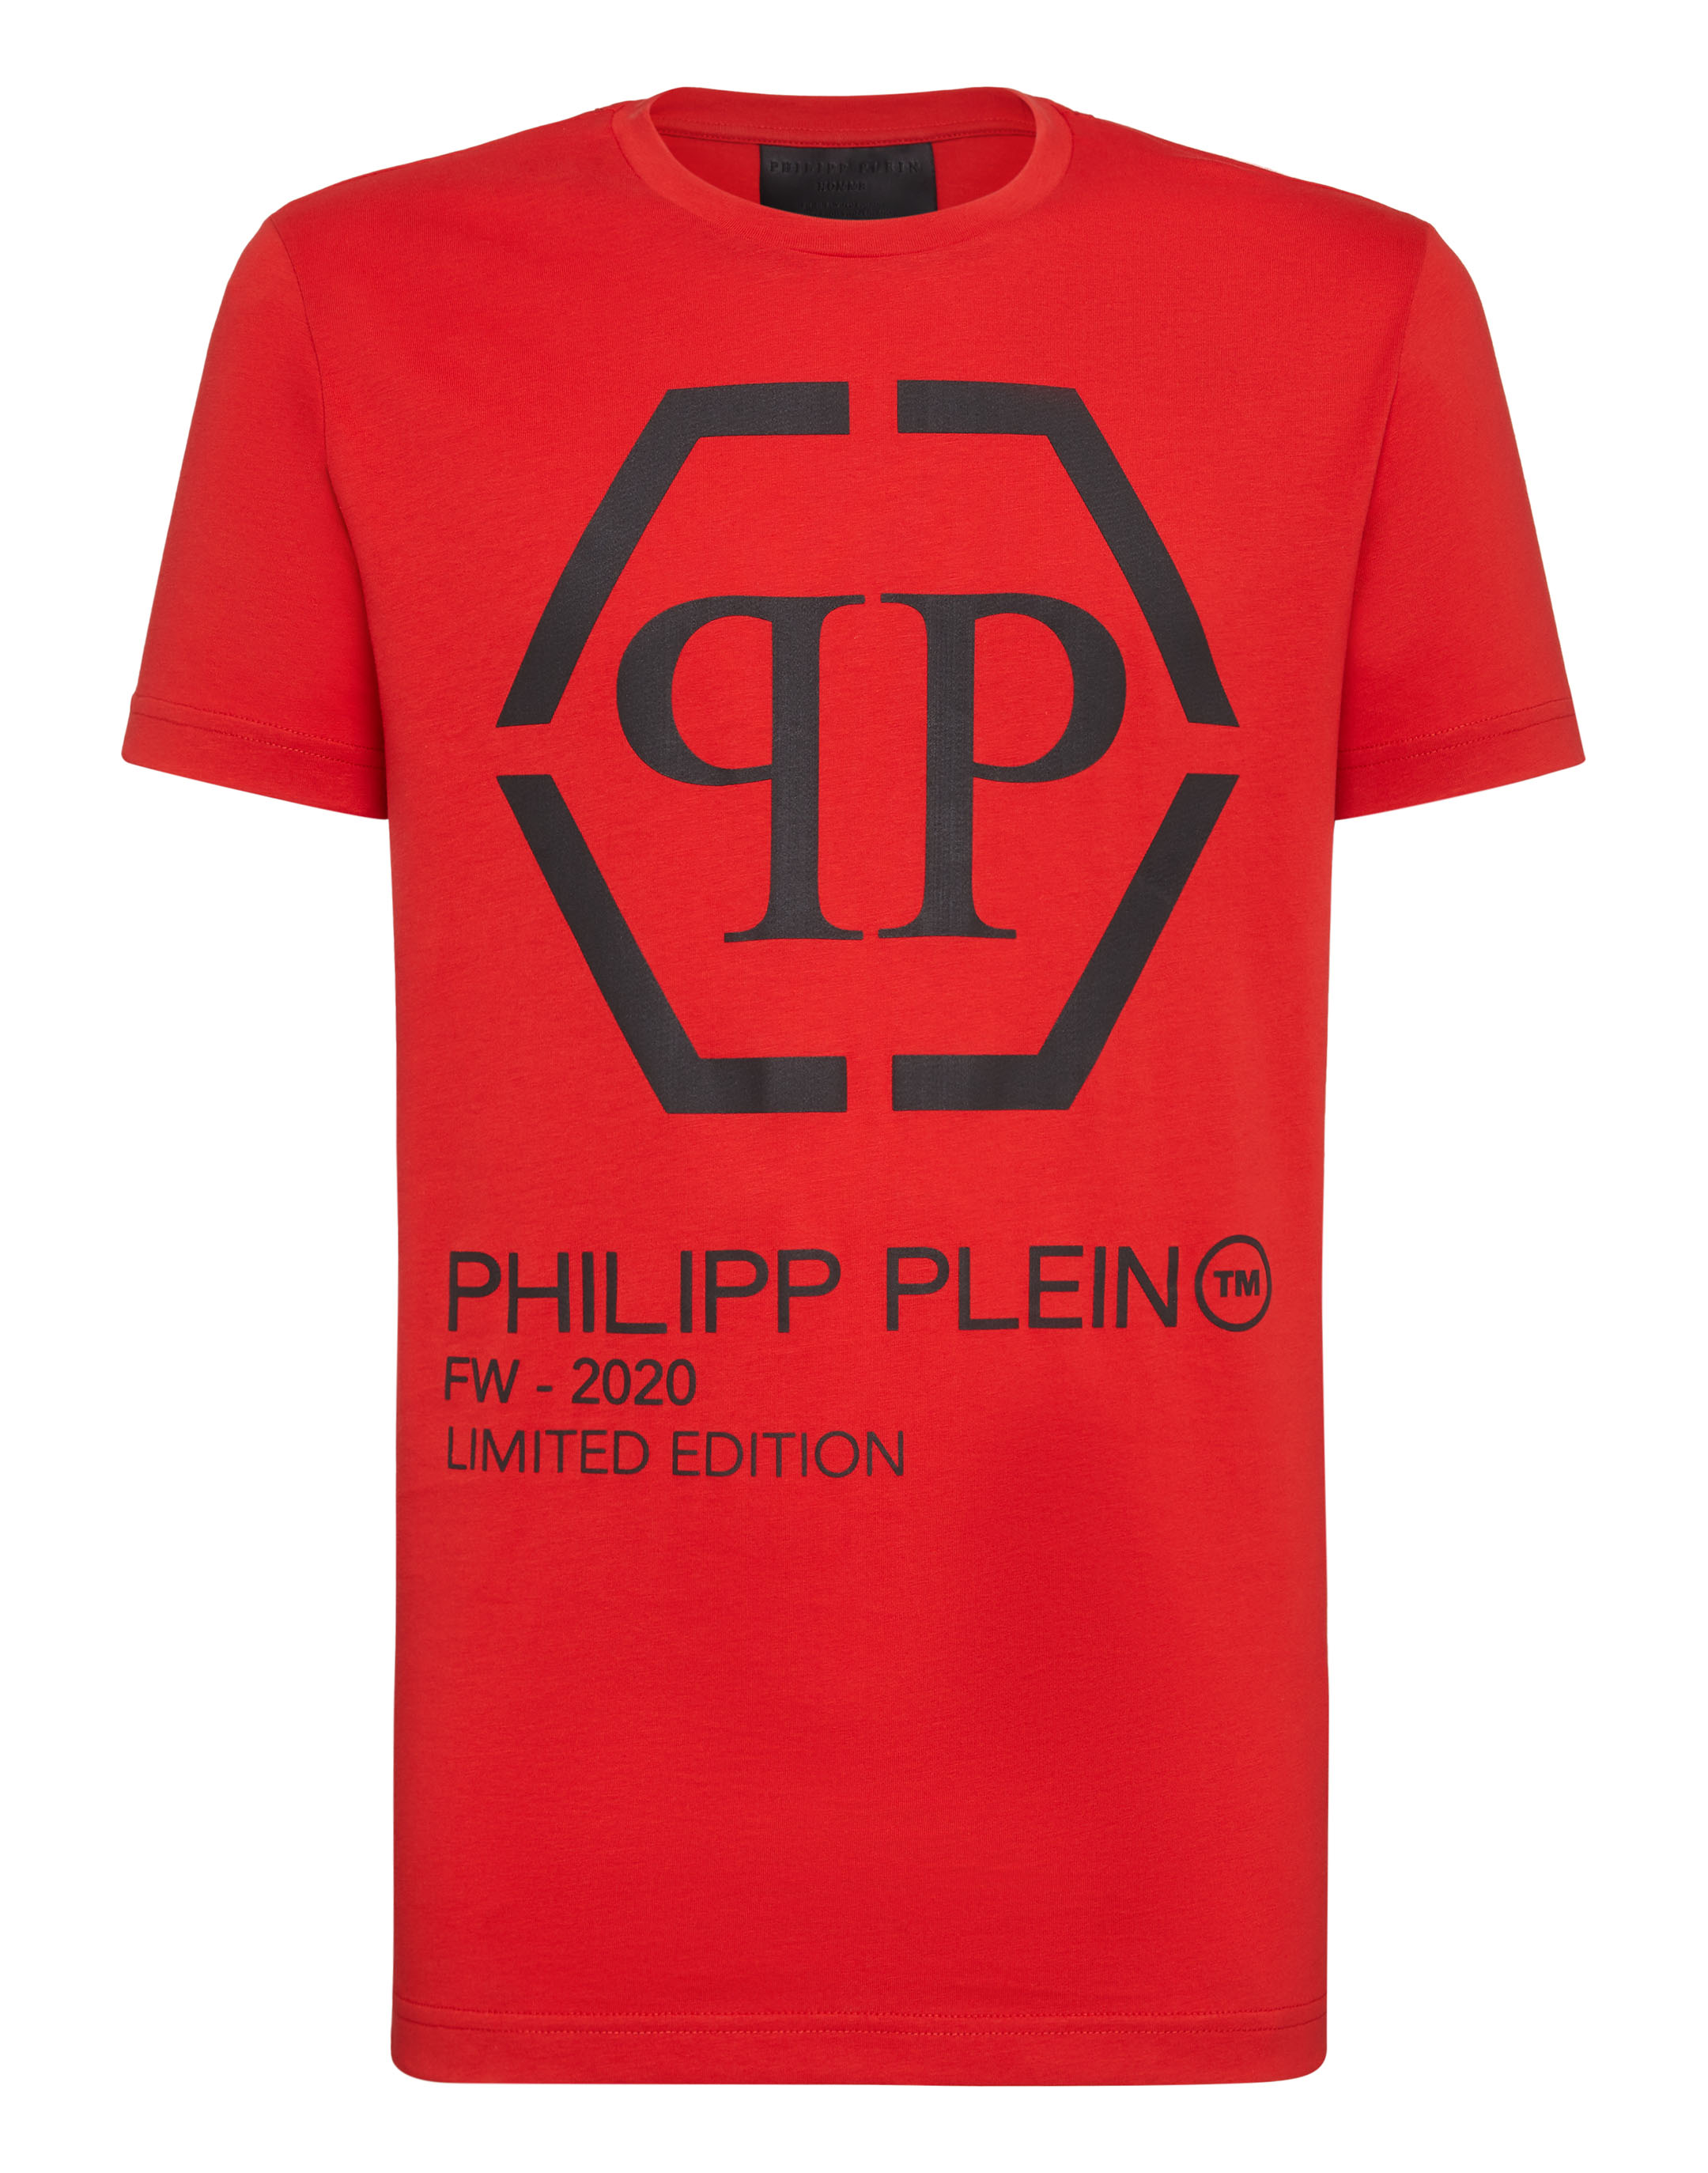 philipp plein t-shirt 2020